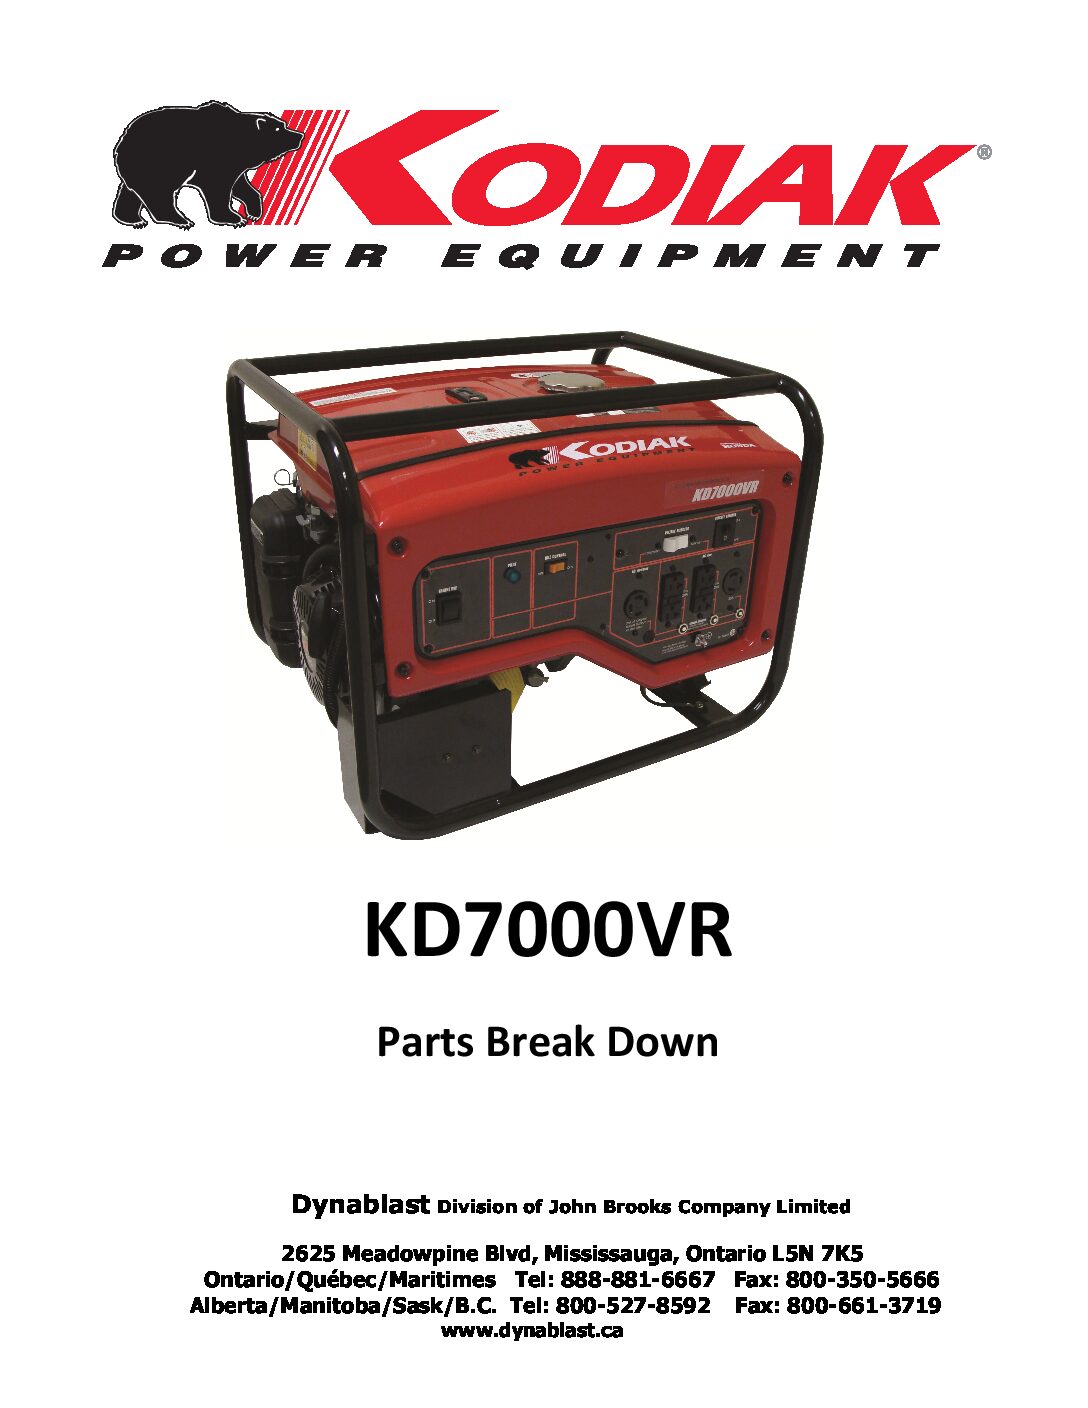 KD7000VR Generator Parts Breakdown